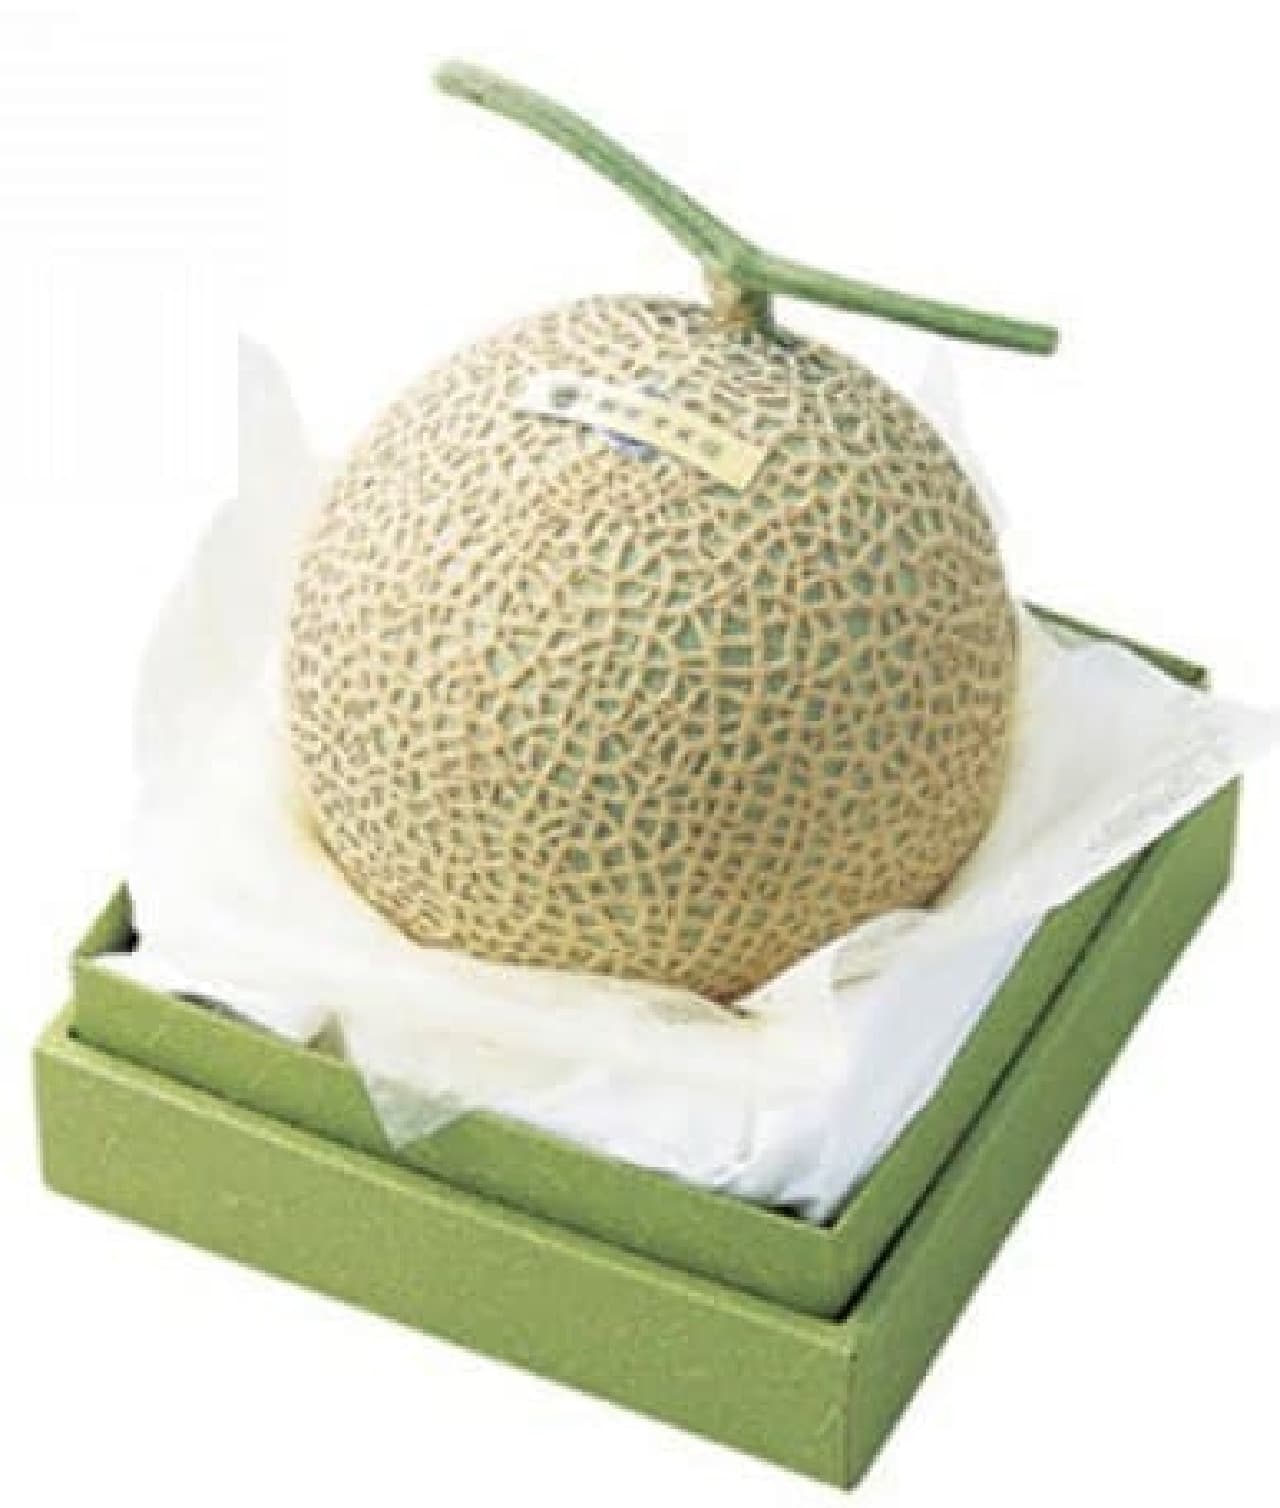 Ginza Sembikiya's melon price is 14,040 yen per piece (Image source: Ginza Sembikiya)